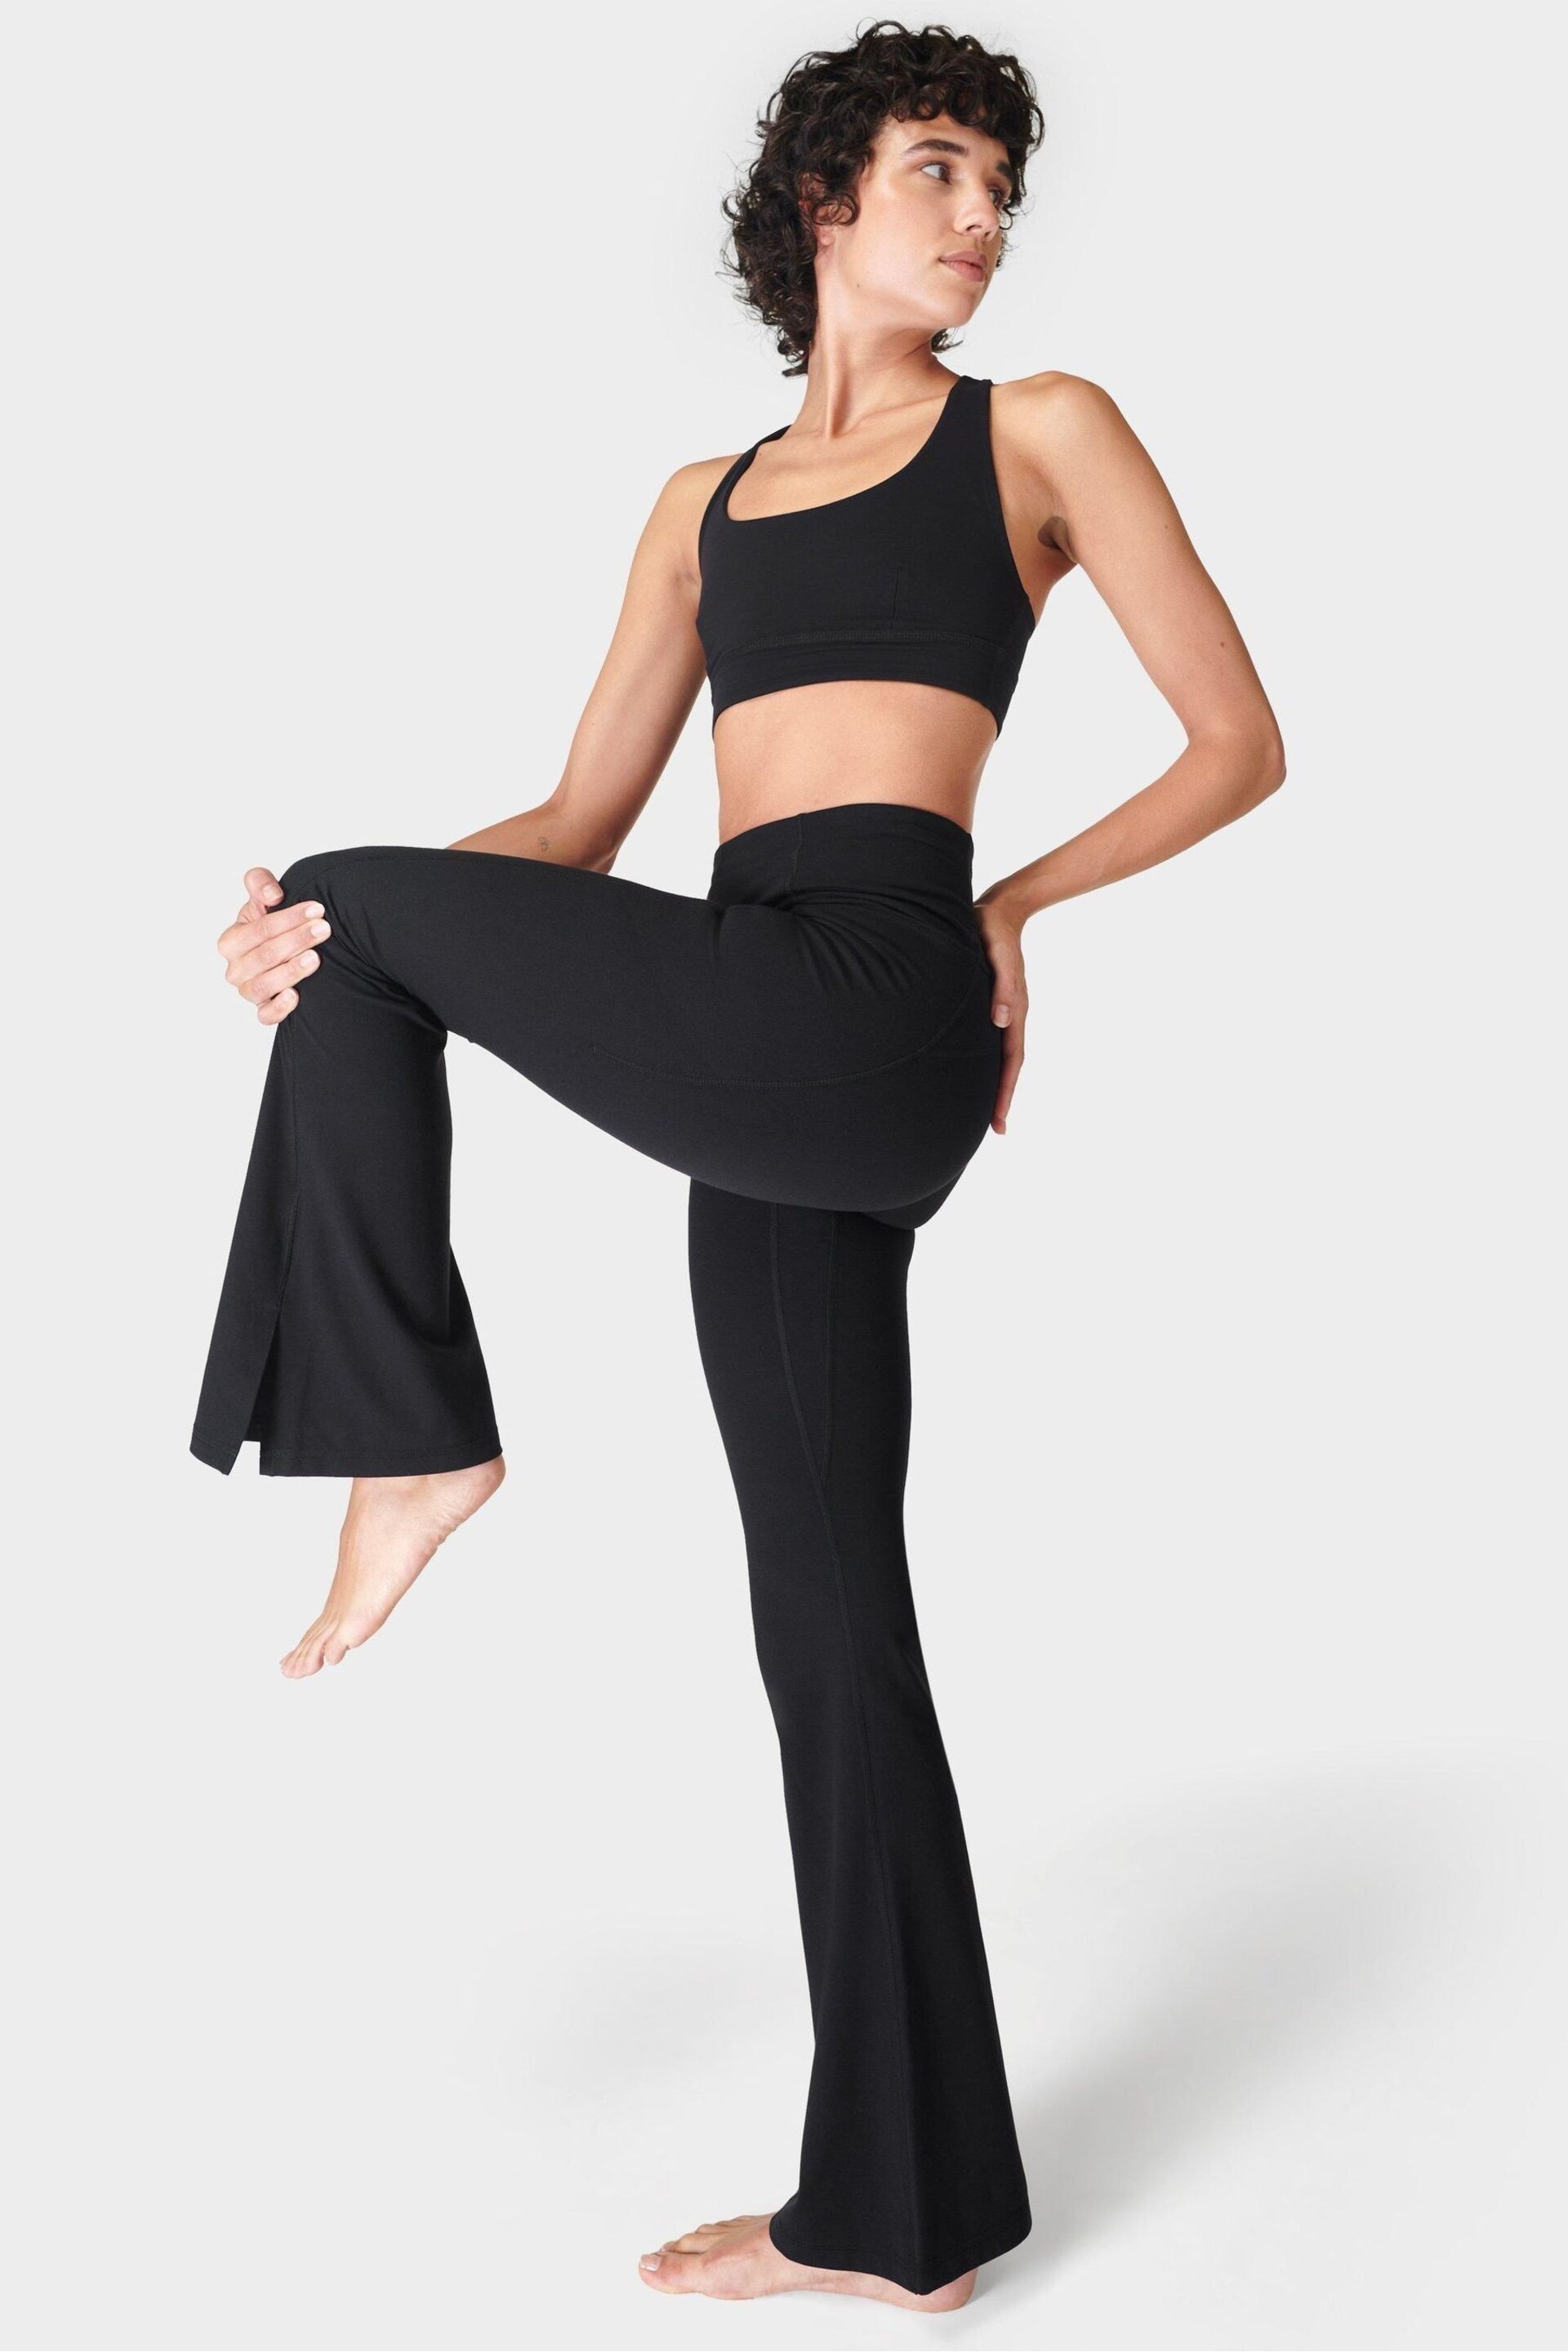 Sweaty Betty Black Super Soft Flare 30" Yoga Trousers - Image 1 of 8